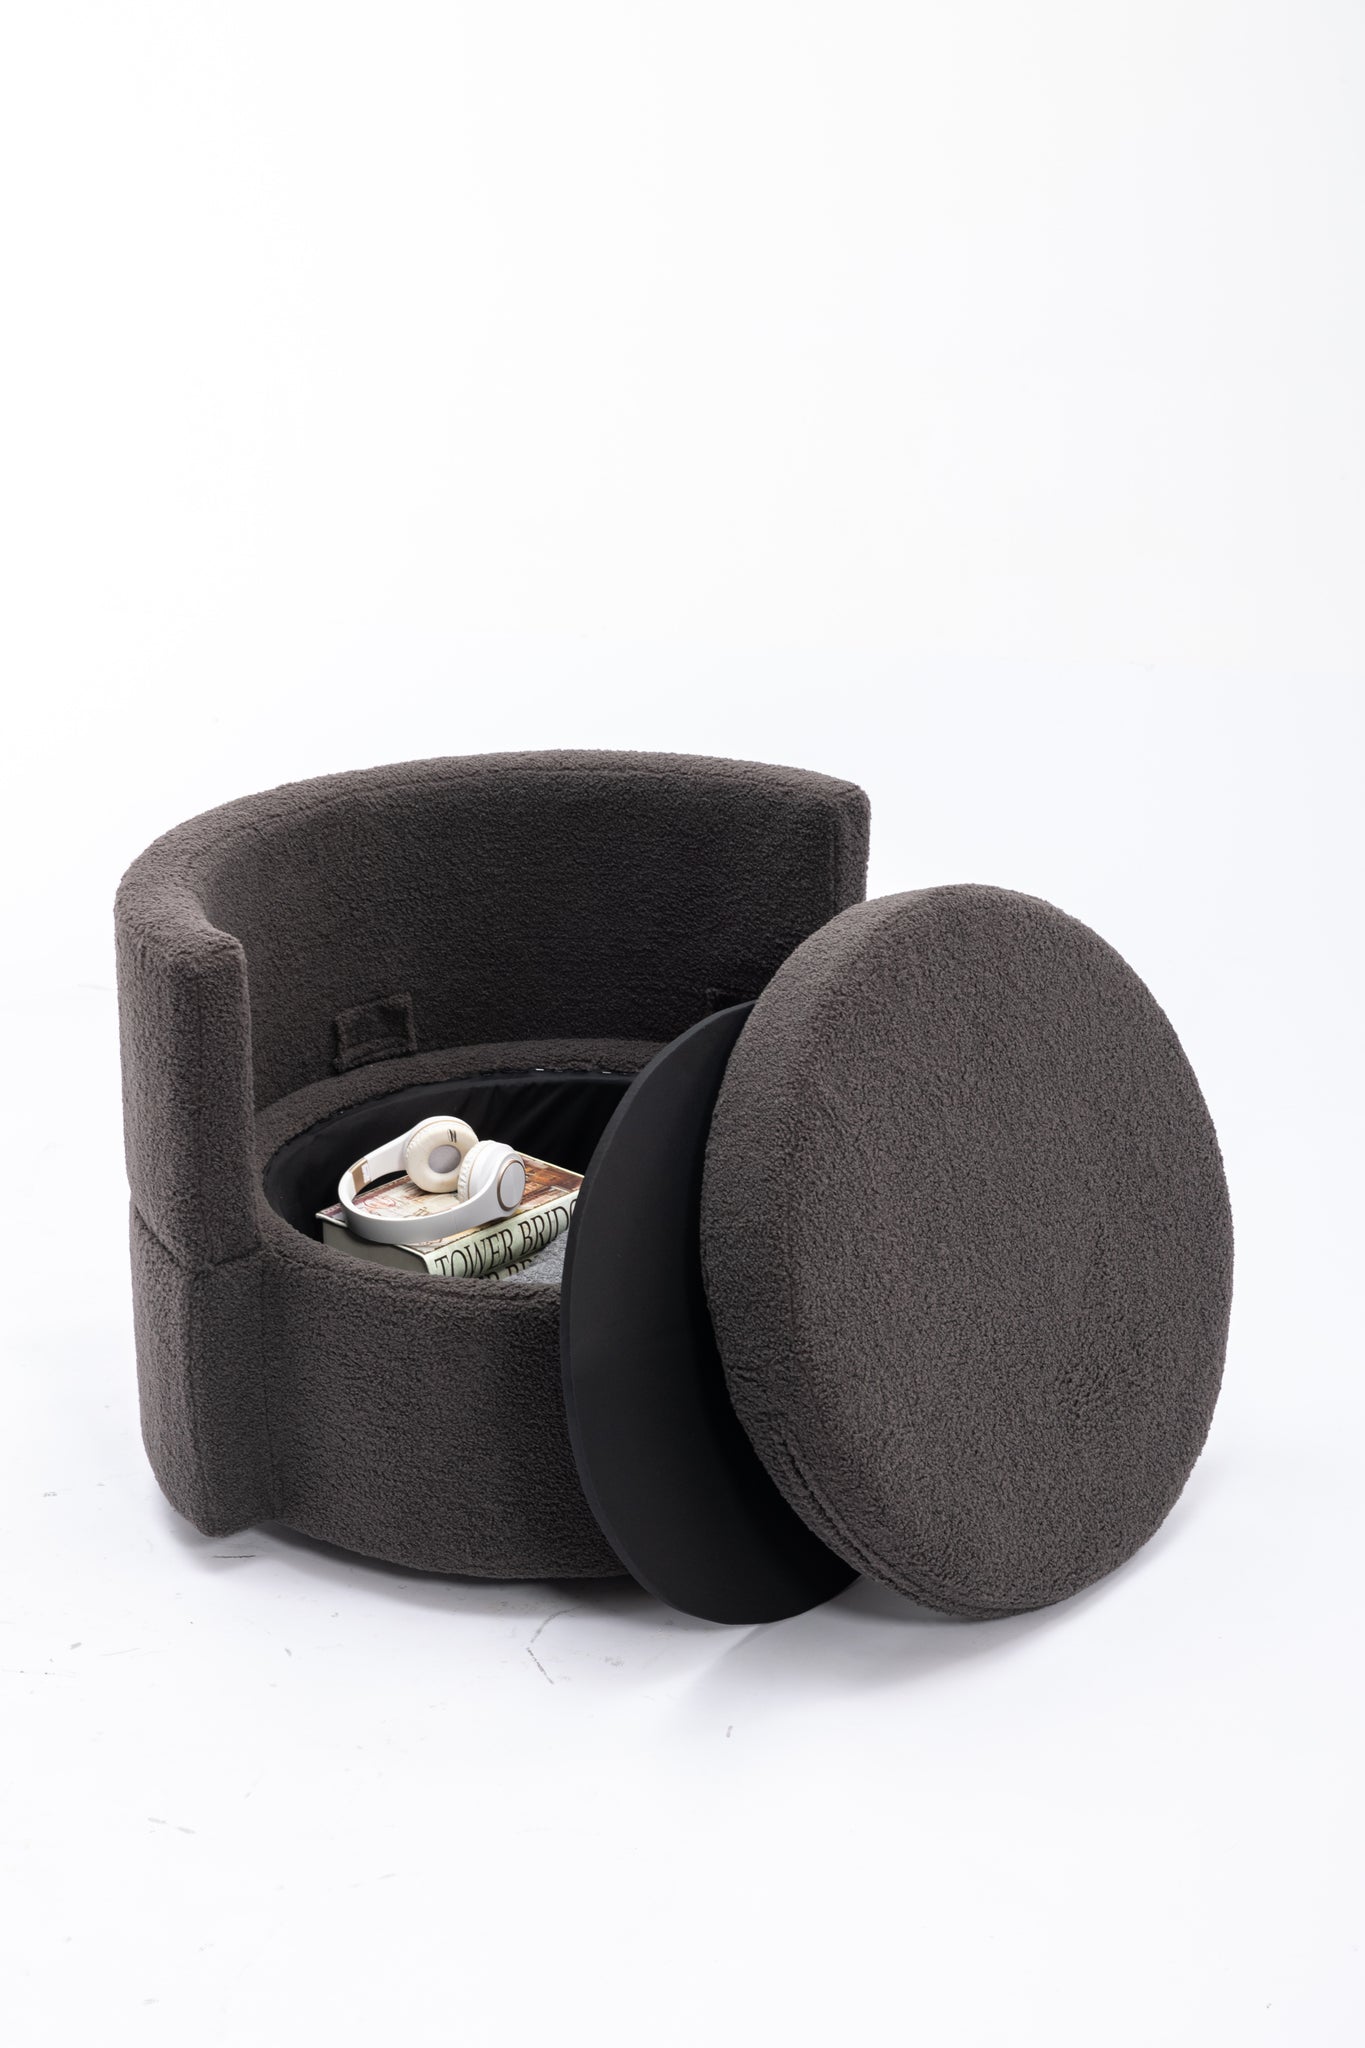 Swivel And Storage Chair For Living Room,Dark Gray dark gray-white-primary living